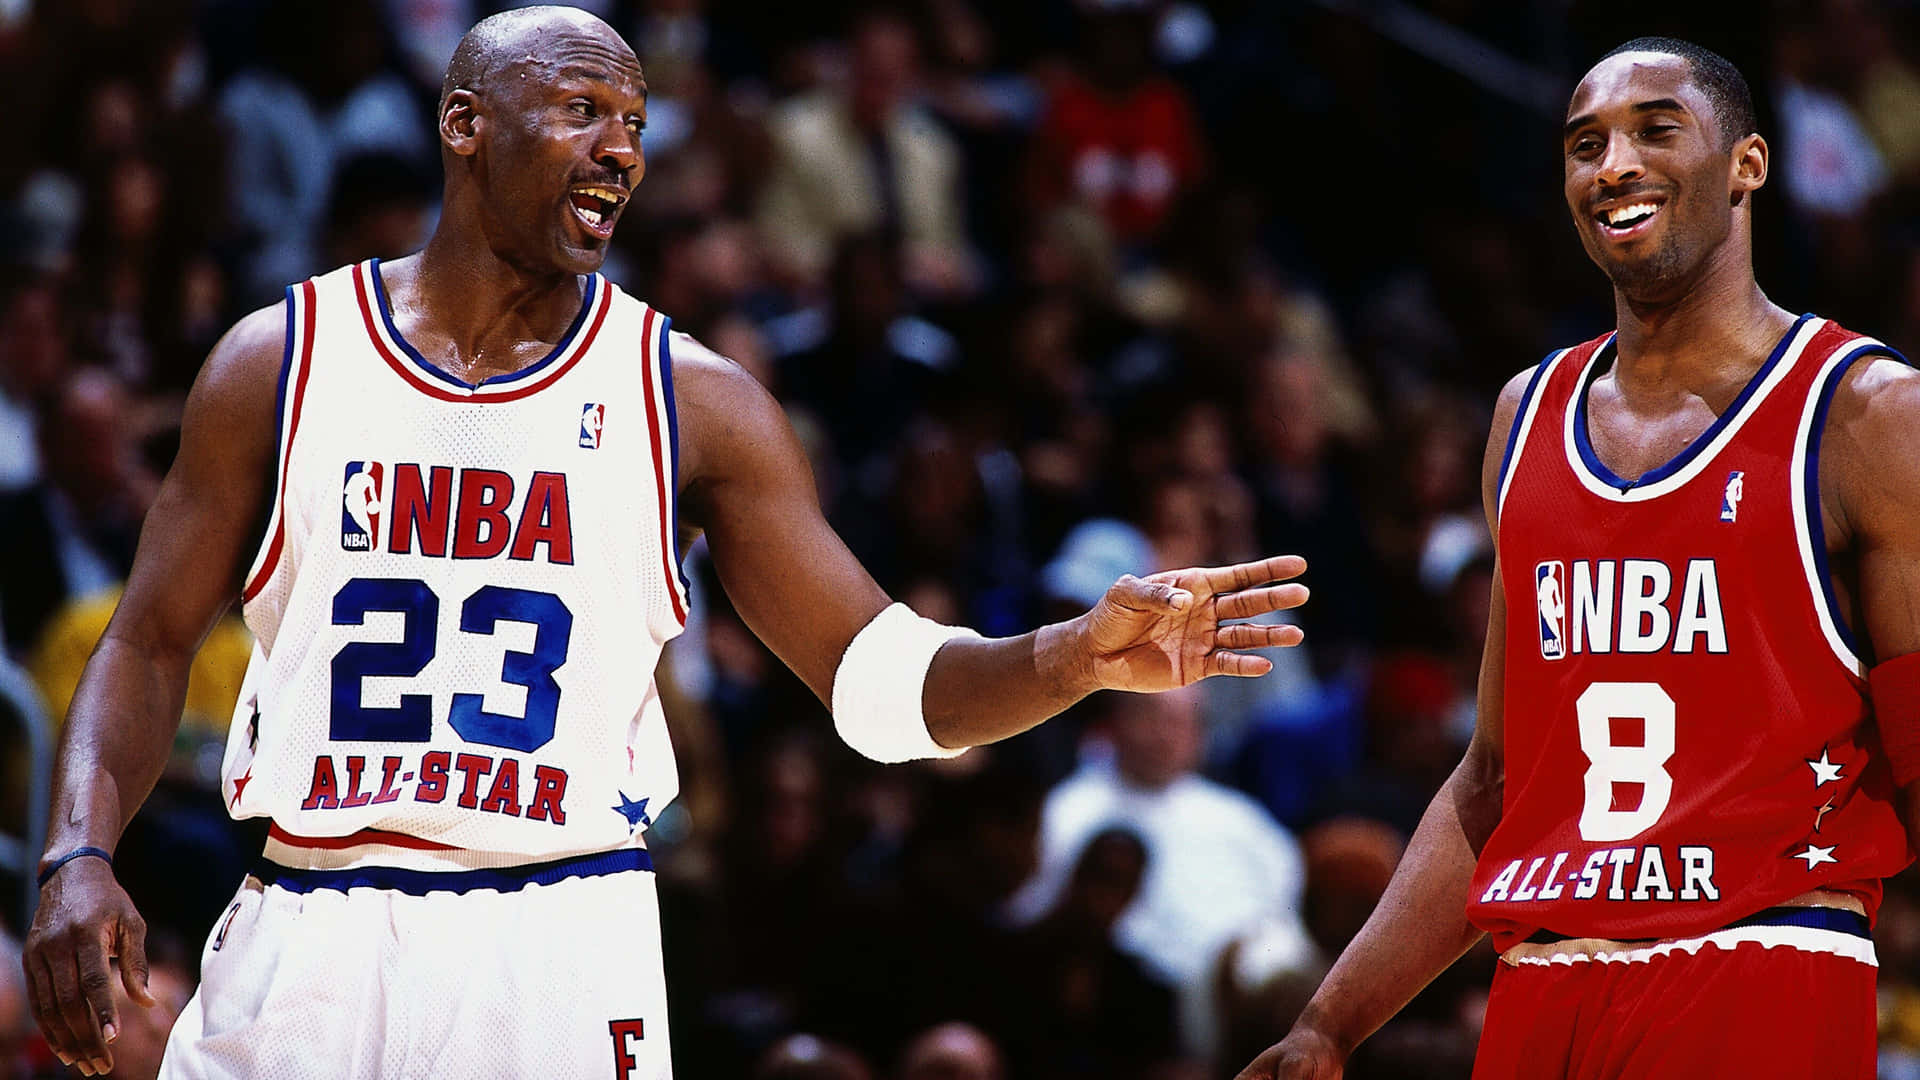 NBA Legends Kobe Bryant And Michael Jordan 2003 Photograph Wallpaper